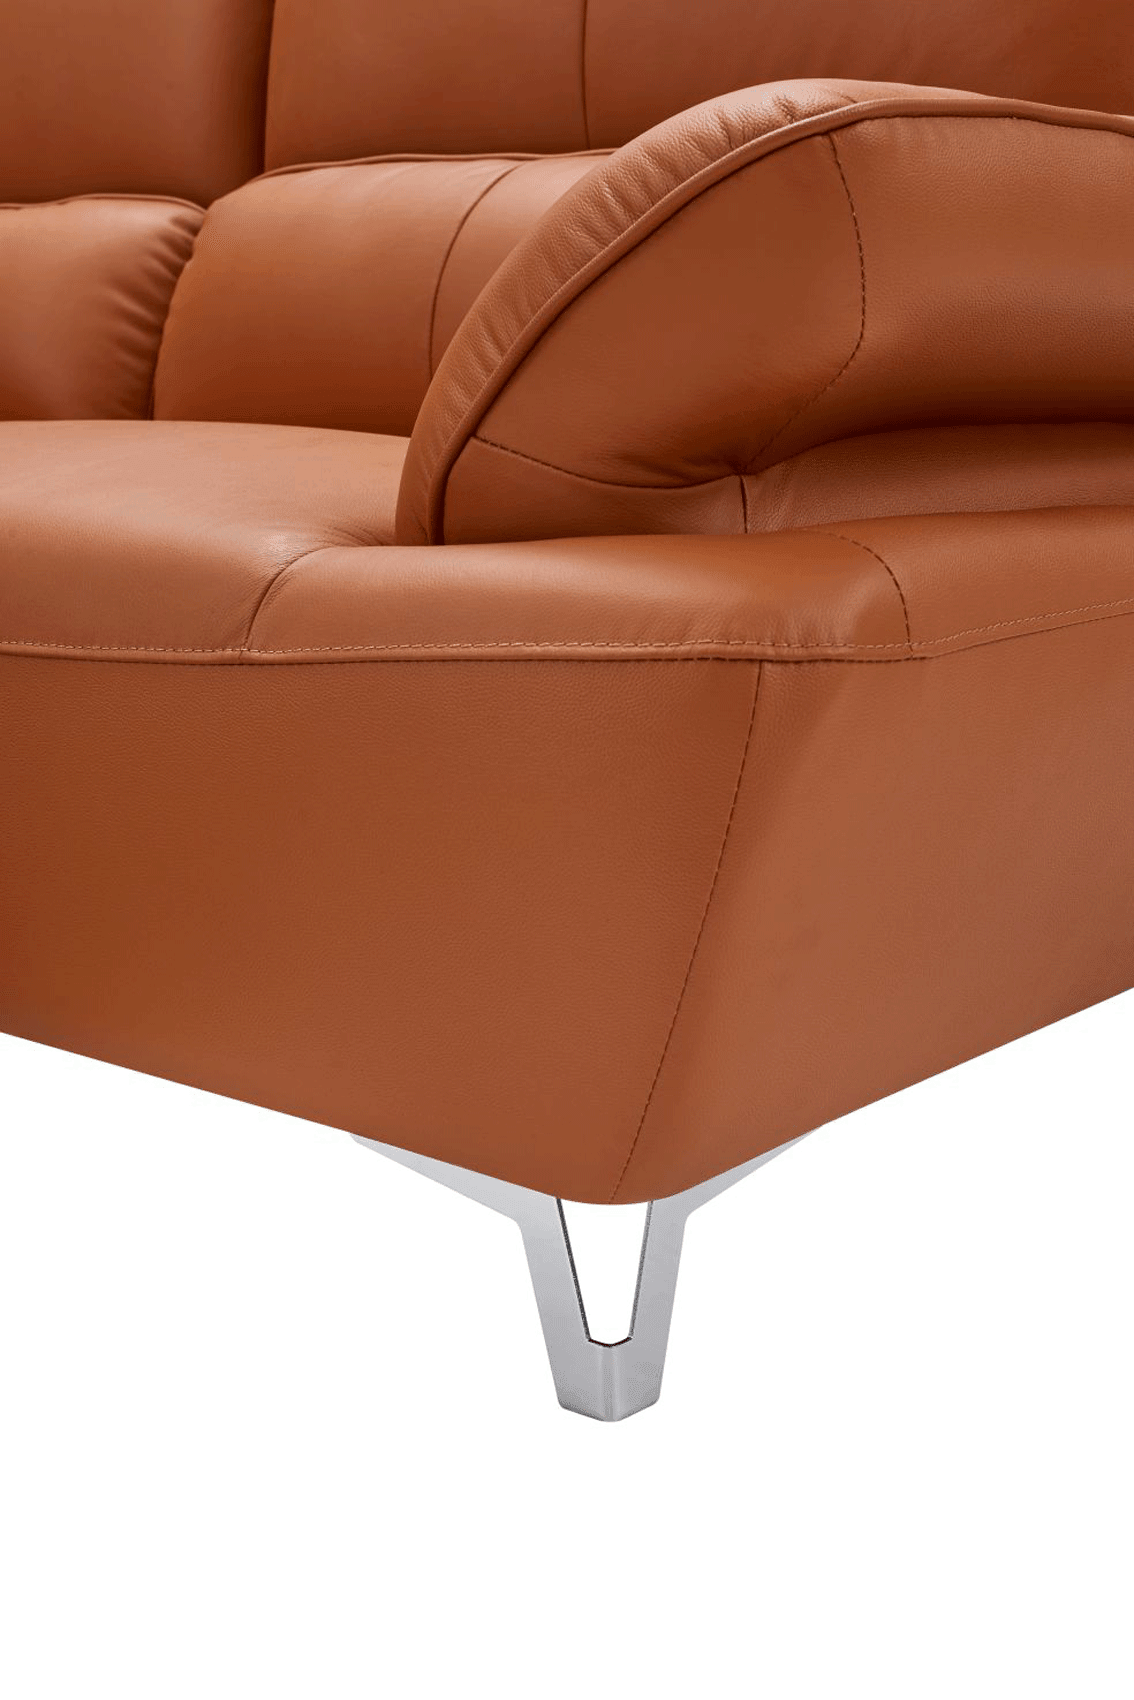 Esf Furniture - 1810 1 Orange Armchair - 18101